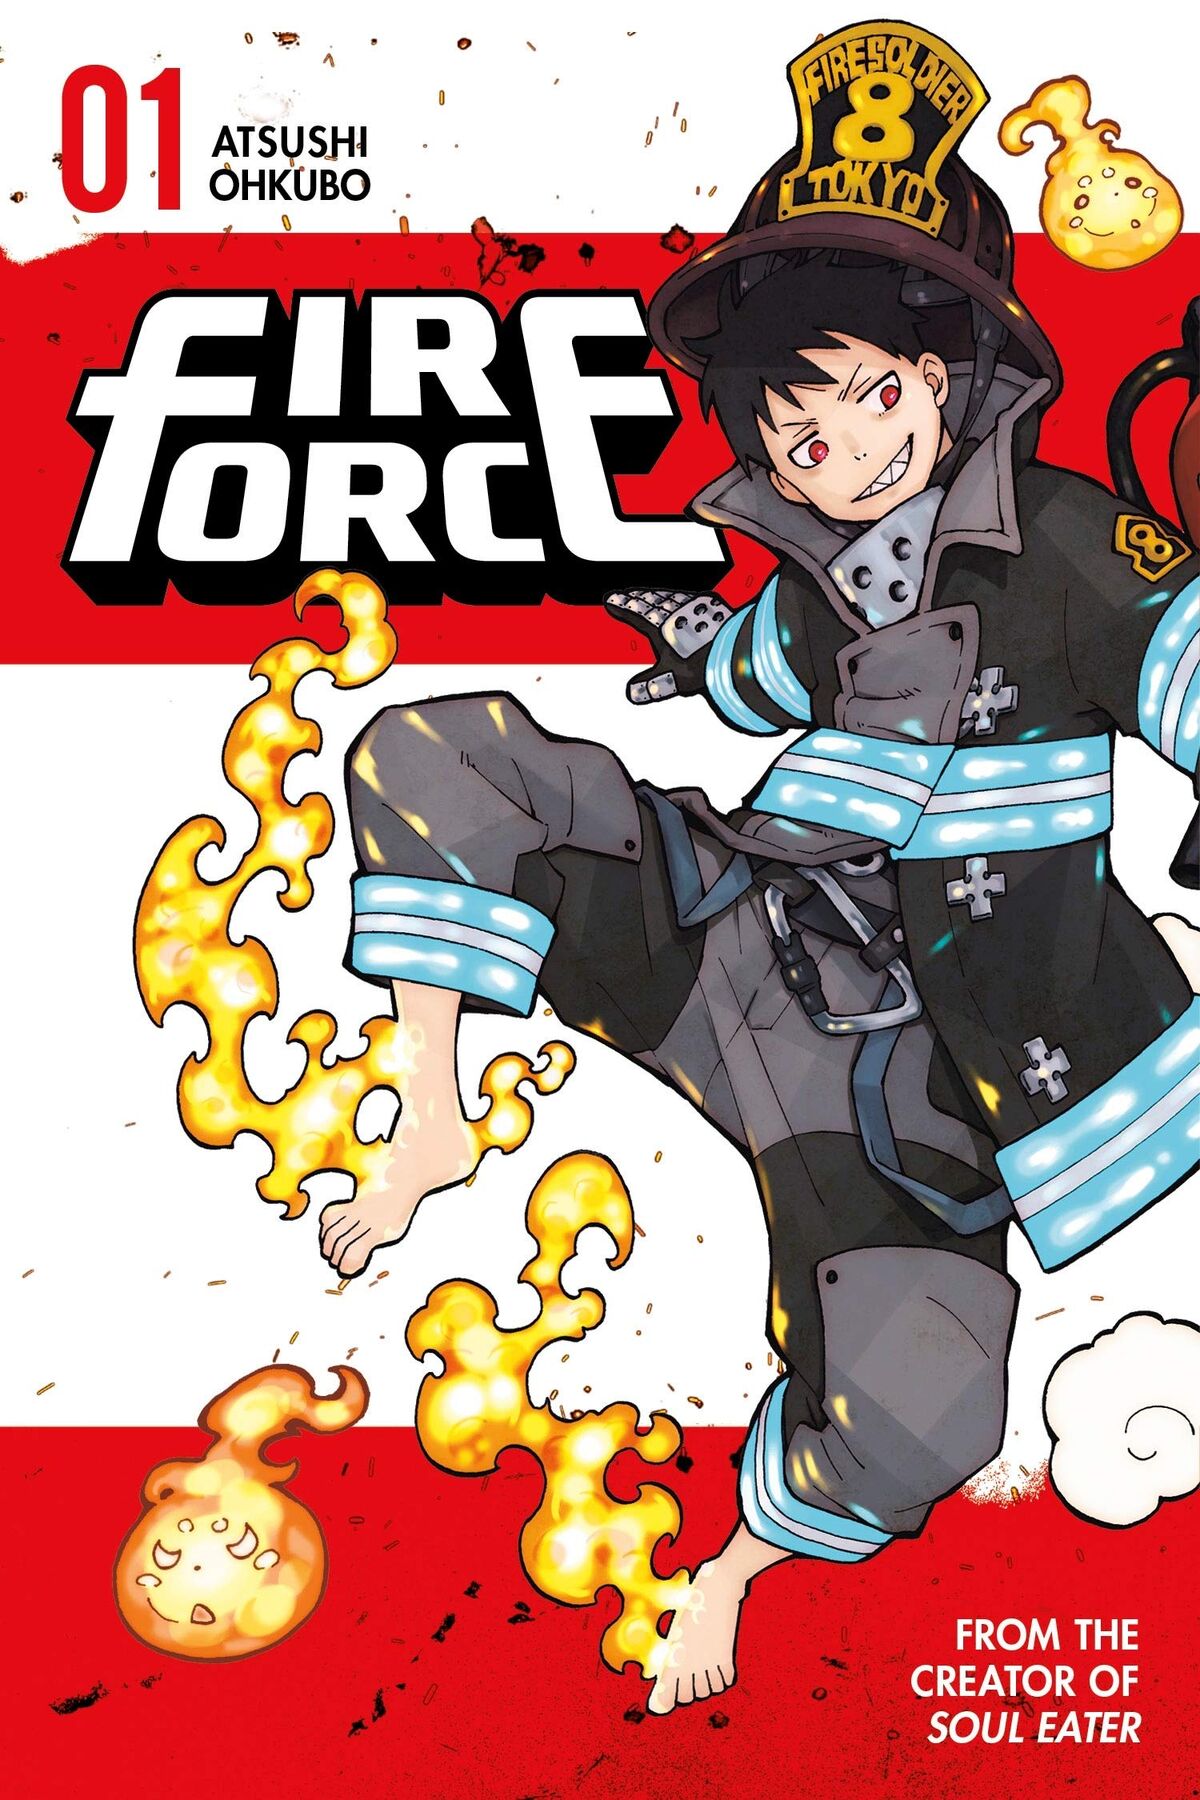 Fire Force, Soul Eater Wiki